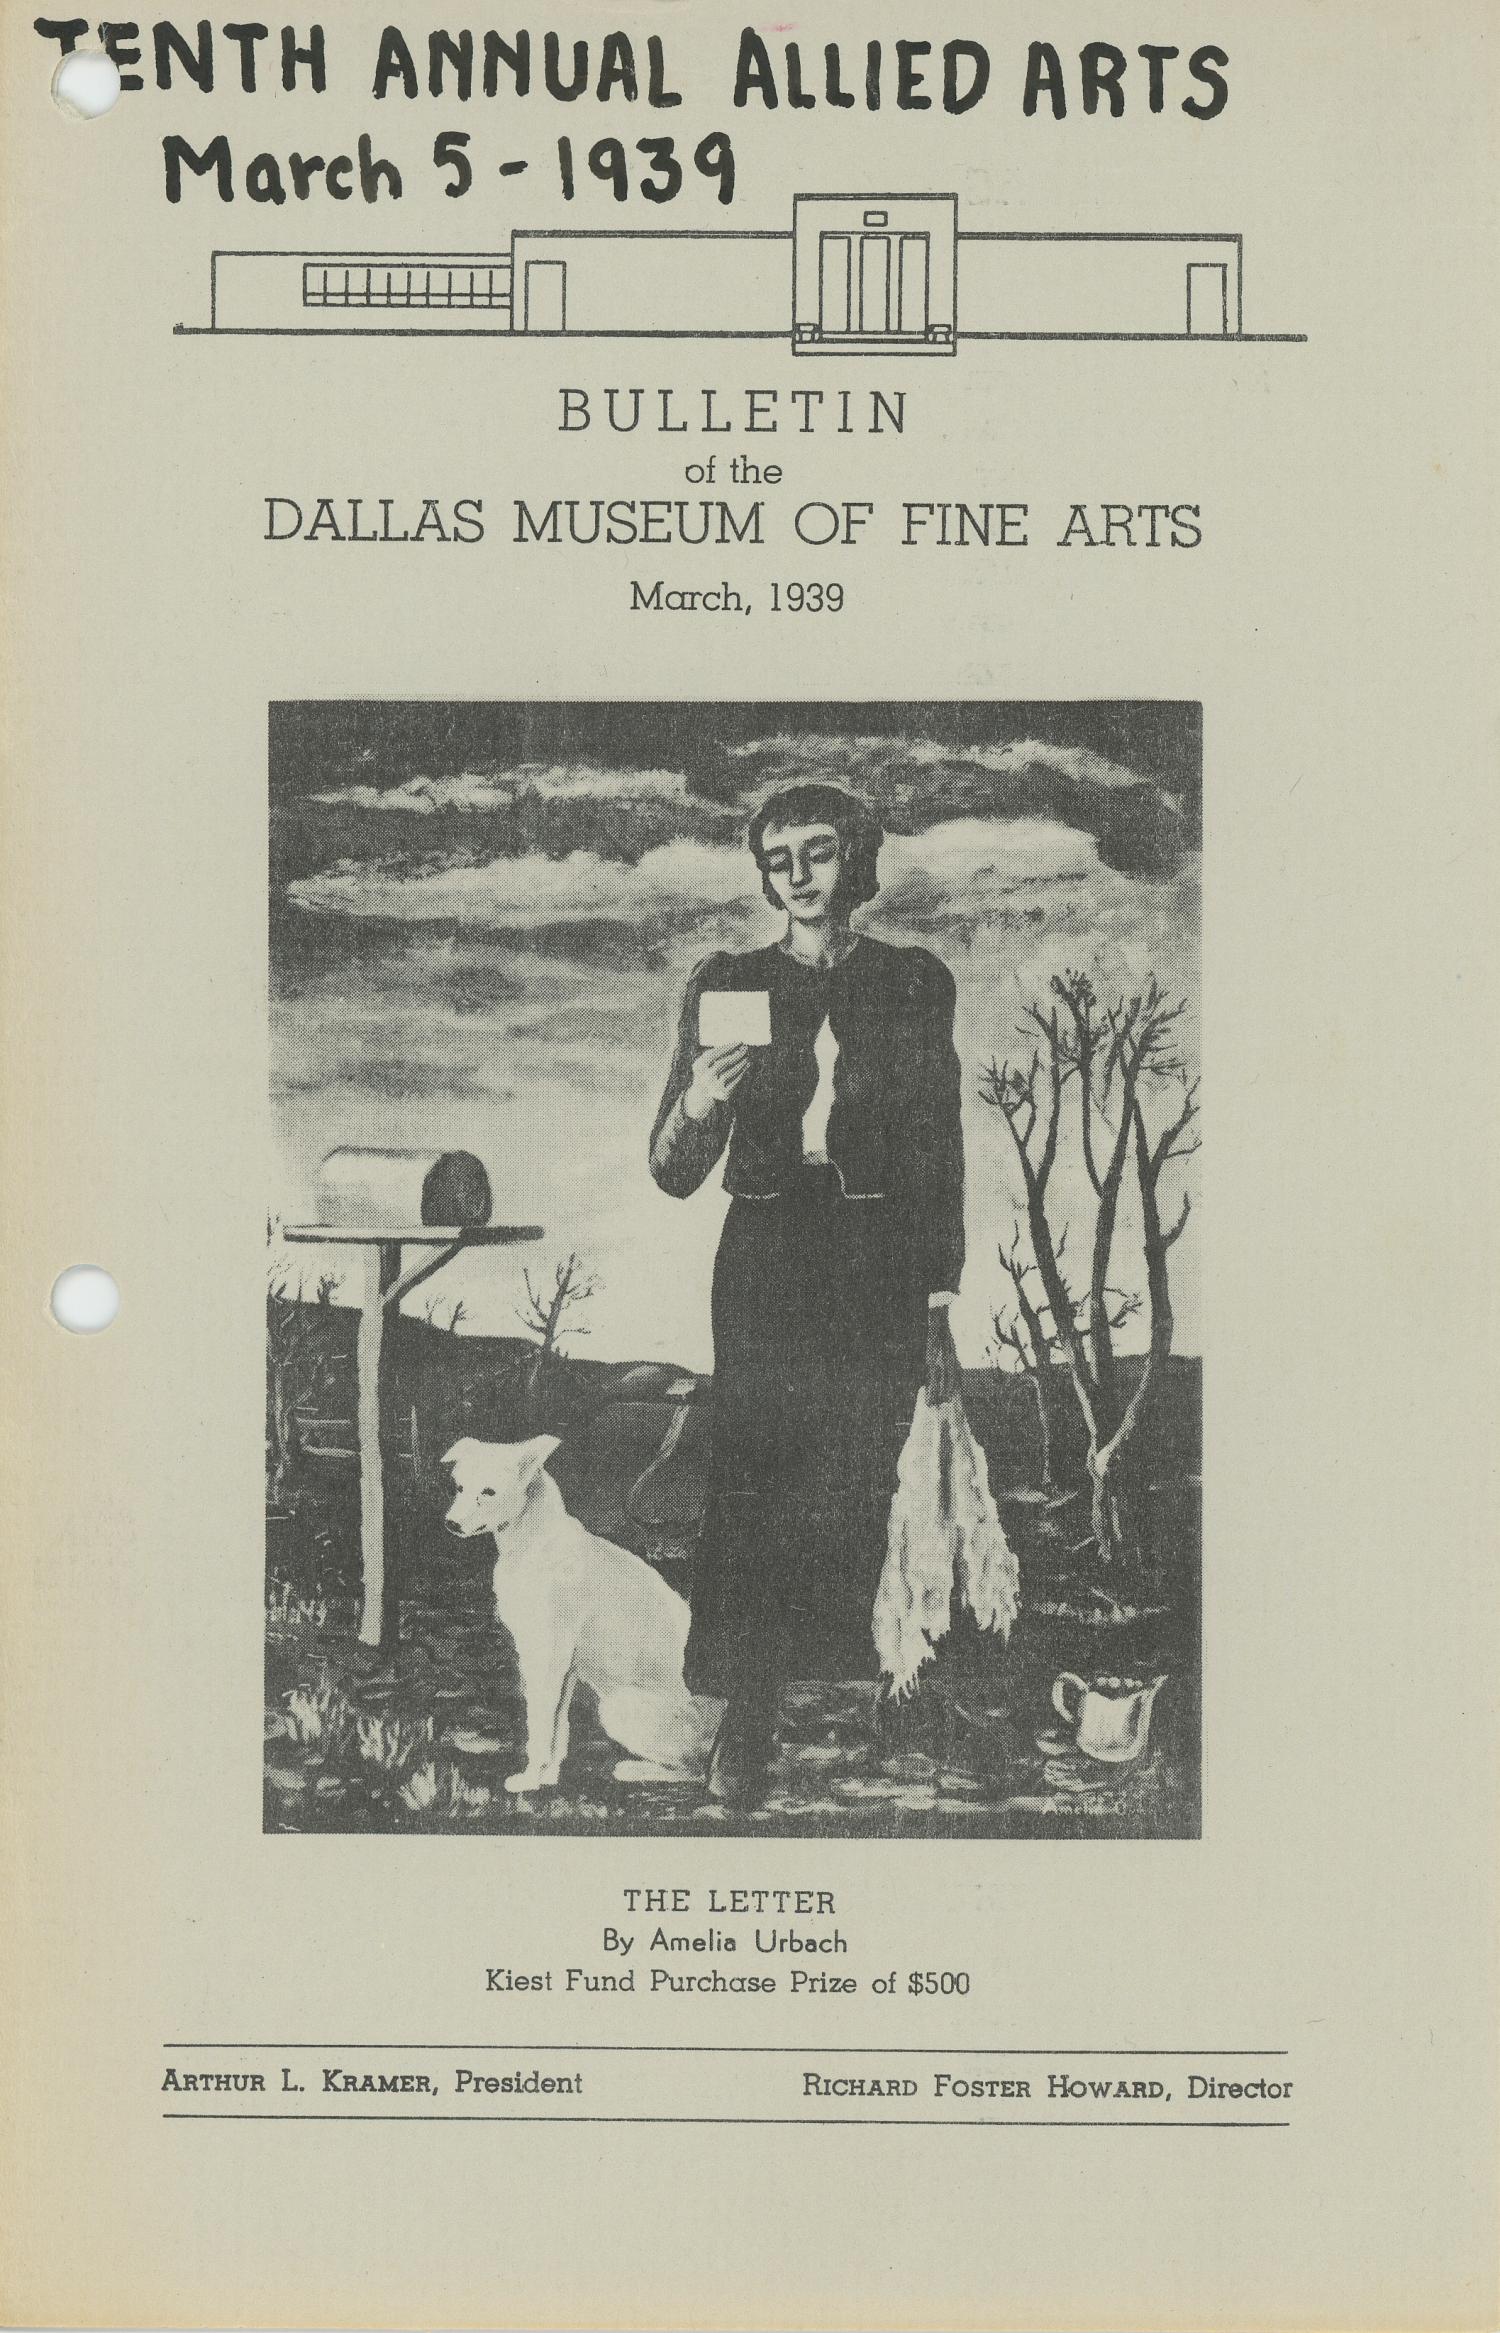 Bulletin of the Dallas Museum of Fine Arts, March 1939
                                                
                                                    1
                                                